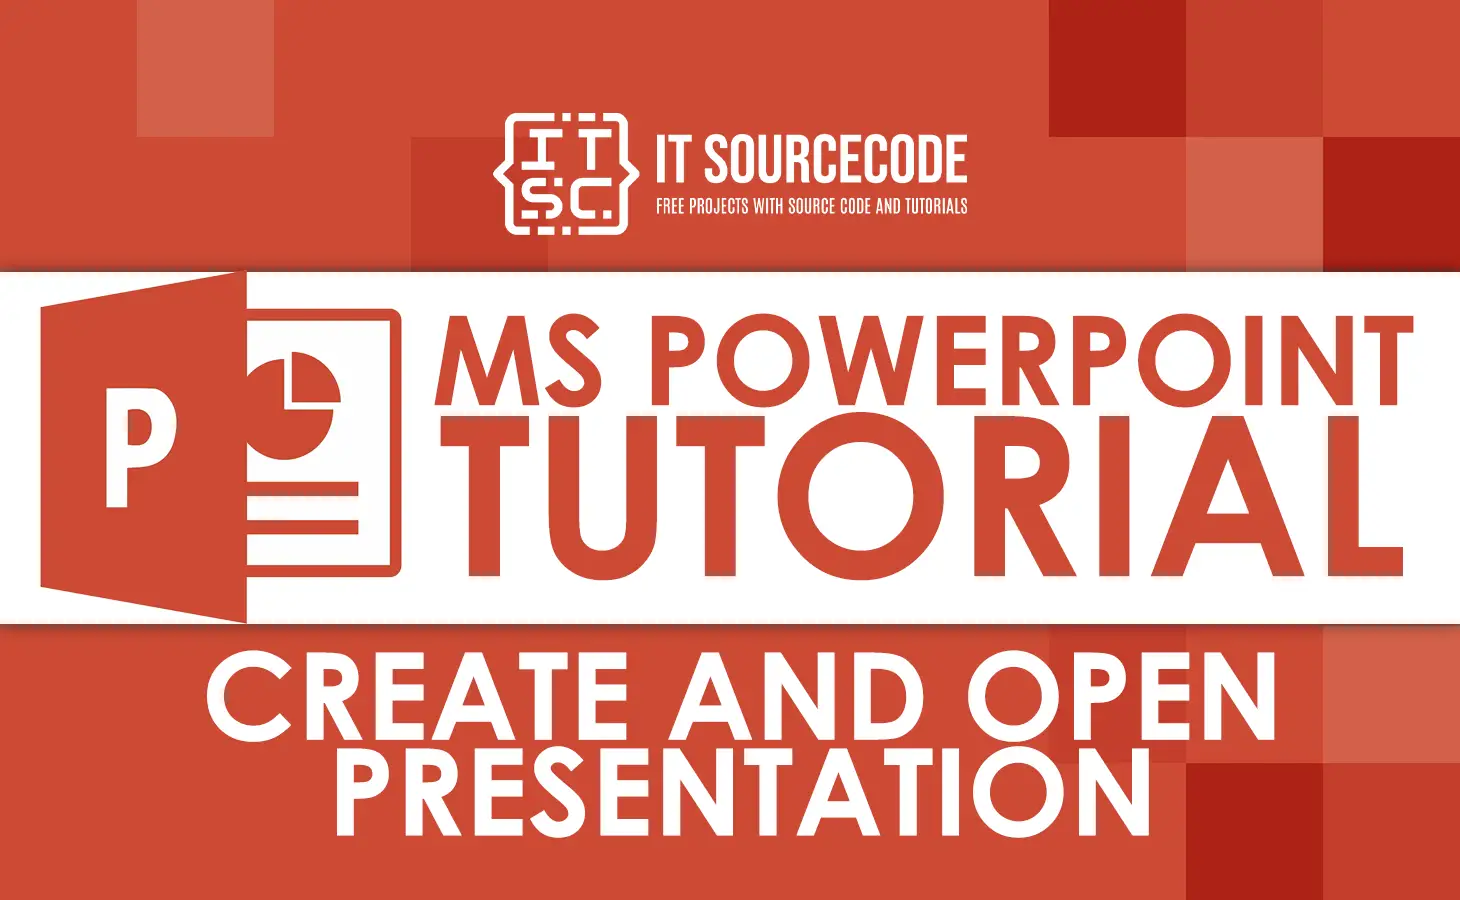 MS Powerpoint Tutorial Create Presentation